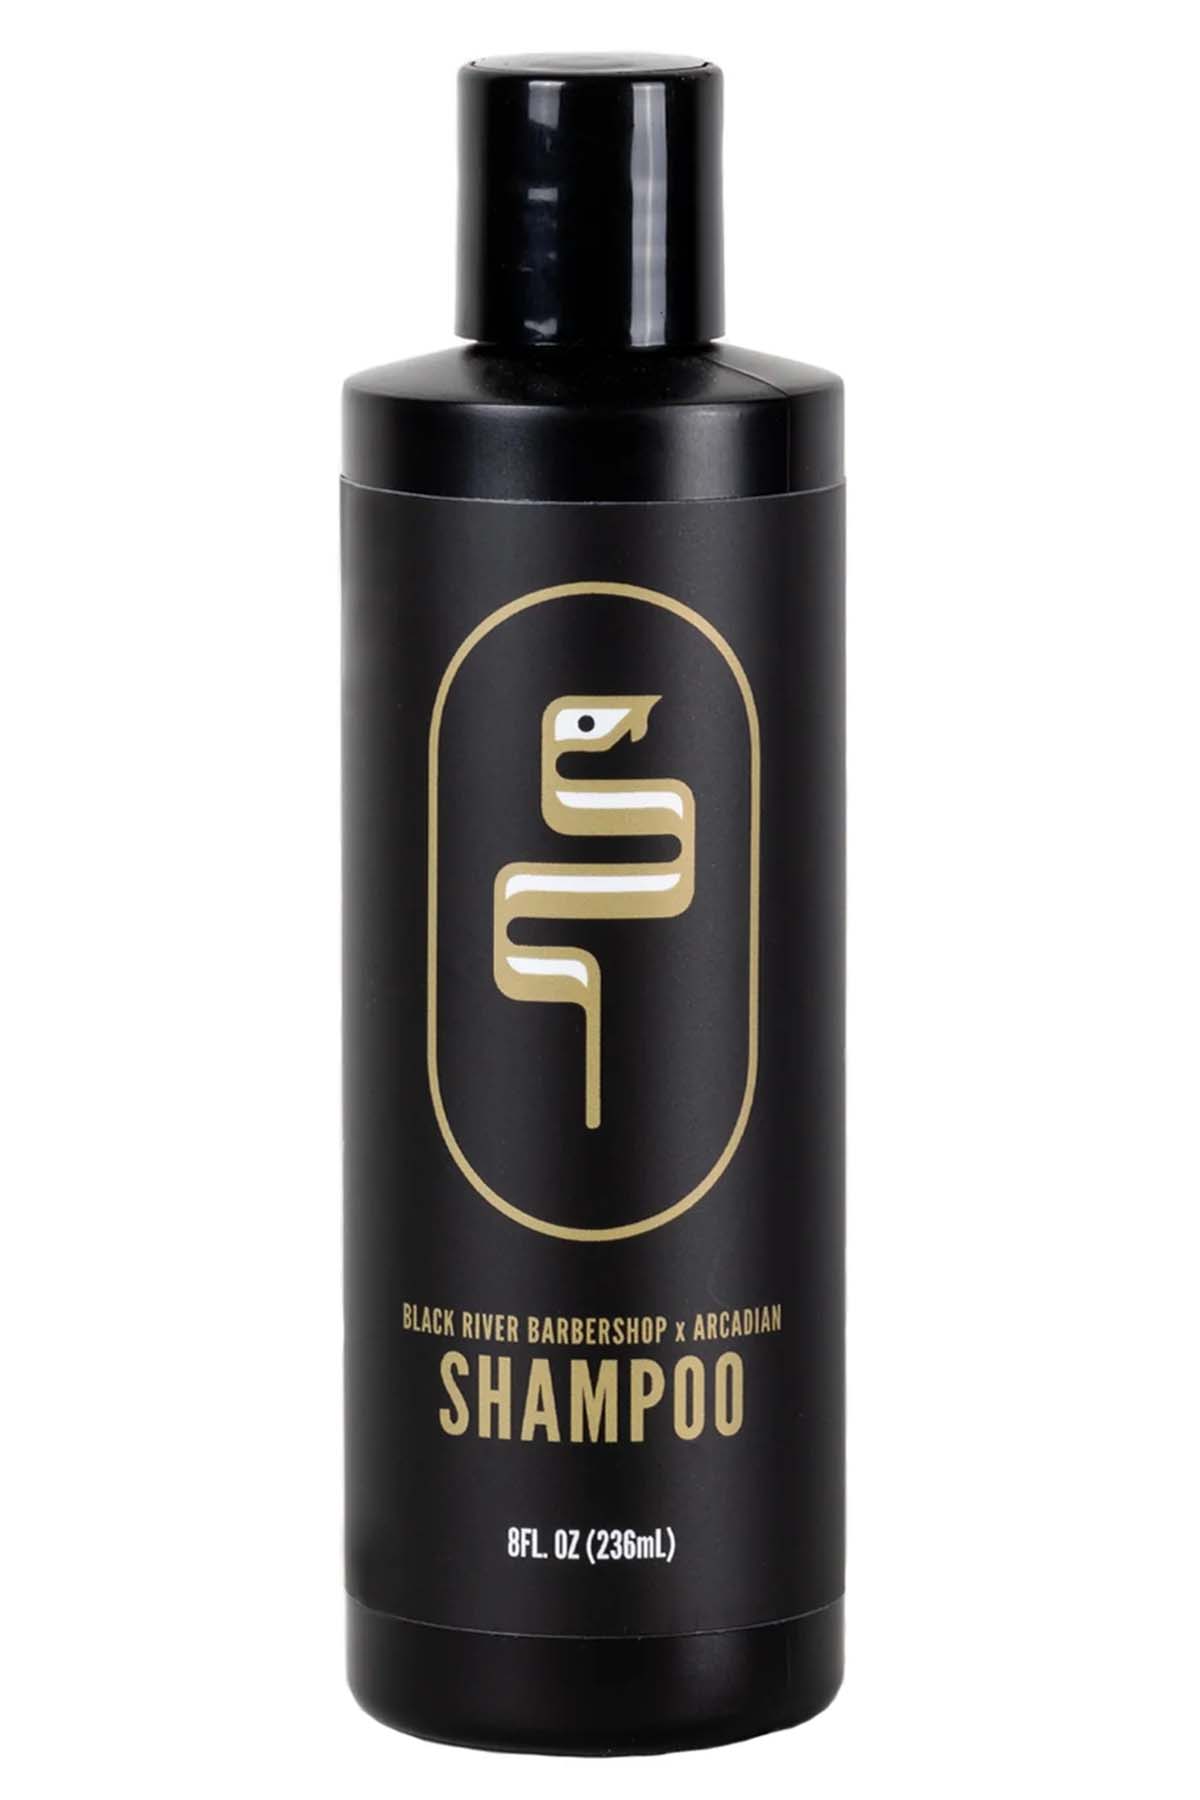 Black River Barbershop x Arcadian Shampoo 8oz